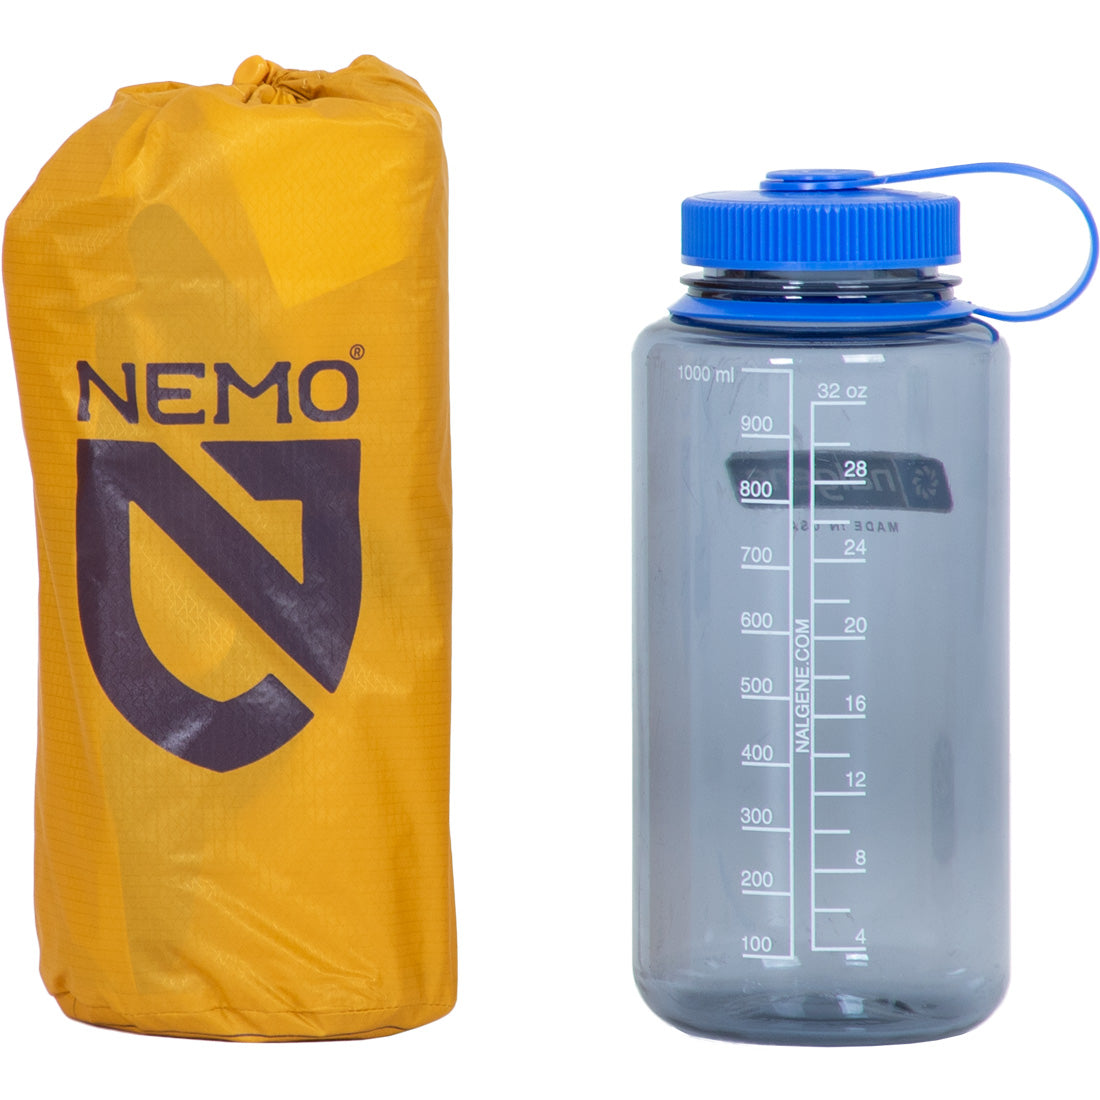 Nemo Tensor Trail Insulated Sleeping Pad